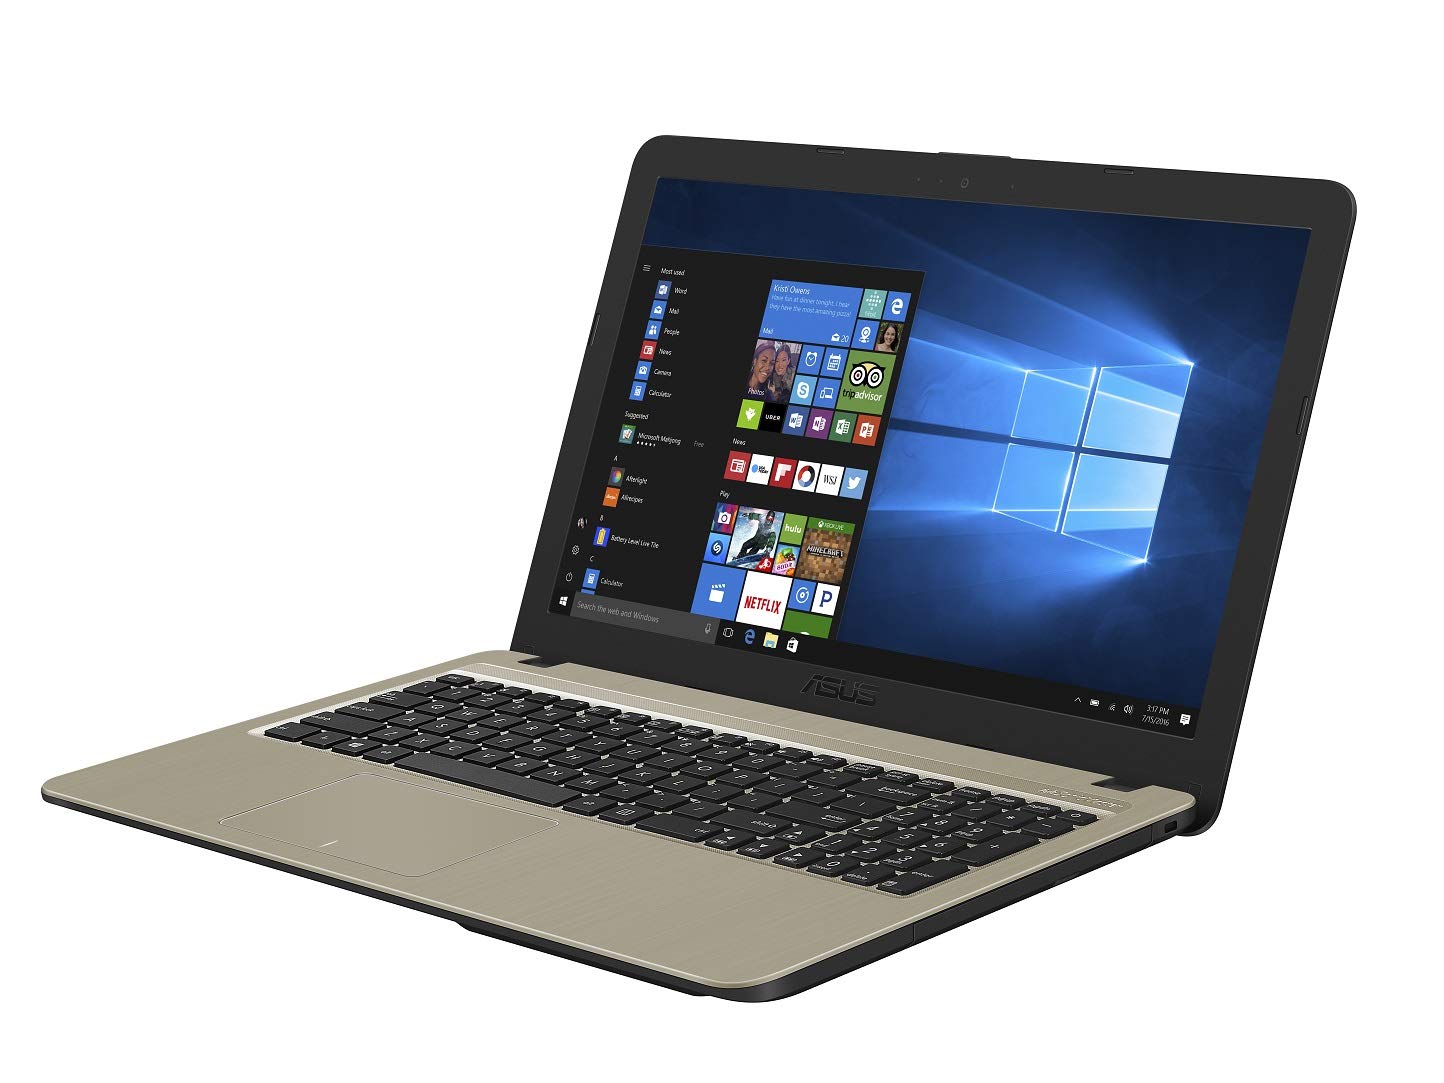 ASUS VivoBooK Intel Celeron N4000 15.6-inch Laptop (4GB/500GB HDD/Windows 10/Chocolate Black/2 Kg), X540MA-GQ024T